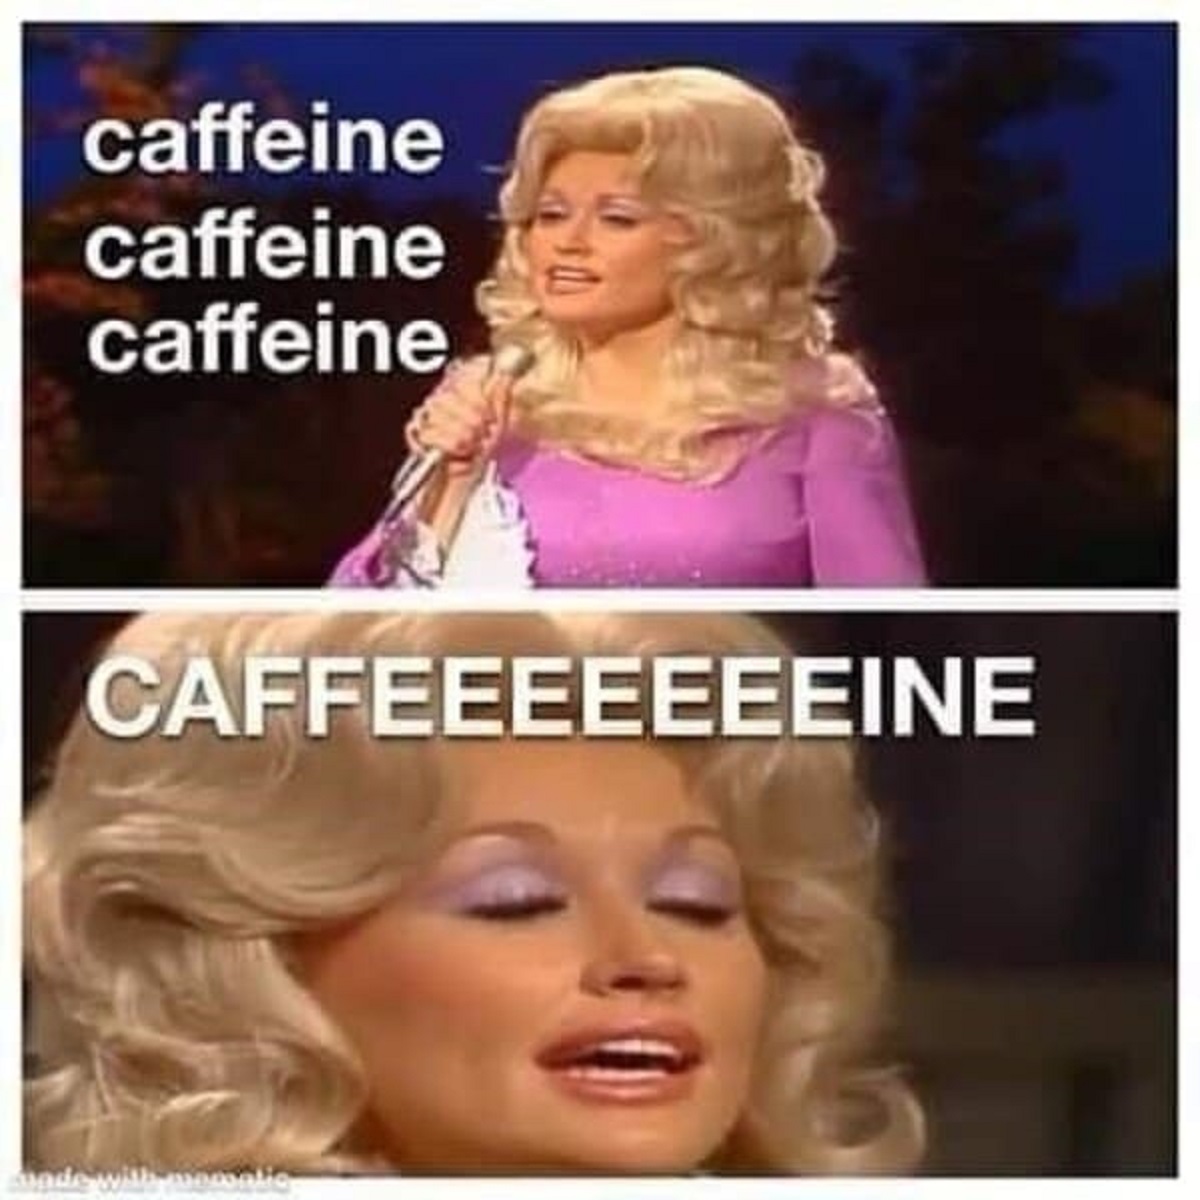 dolly parton caffeine meme - caffeine caffeine caffeine Caffeeeeeeeine made with mopontic